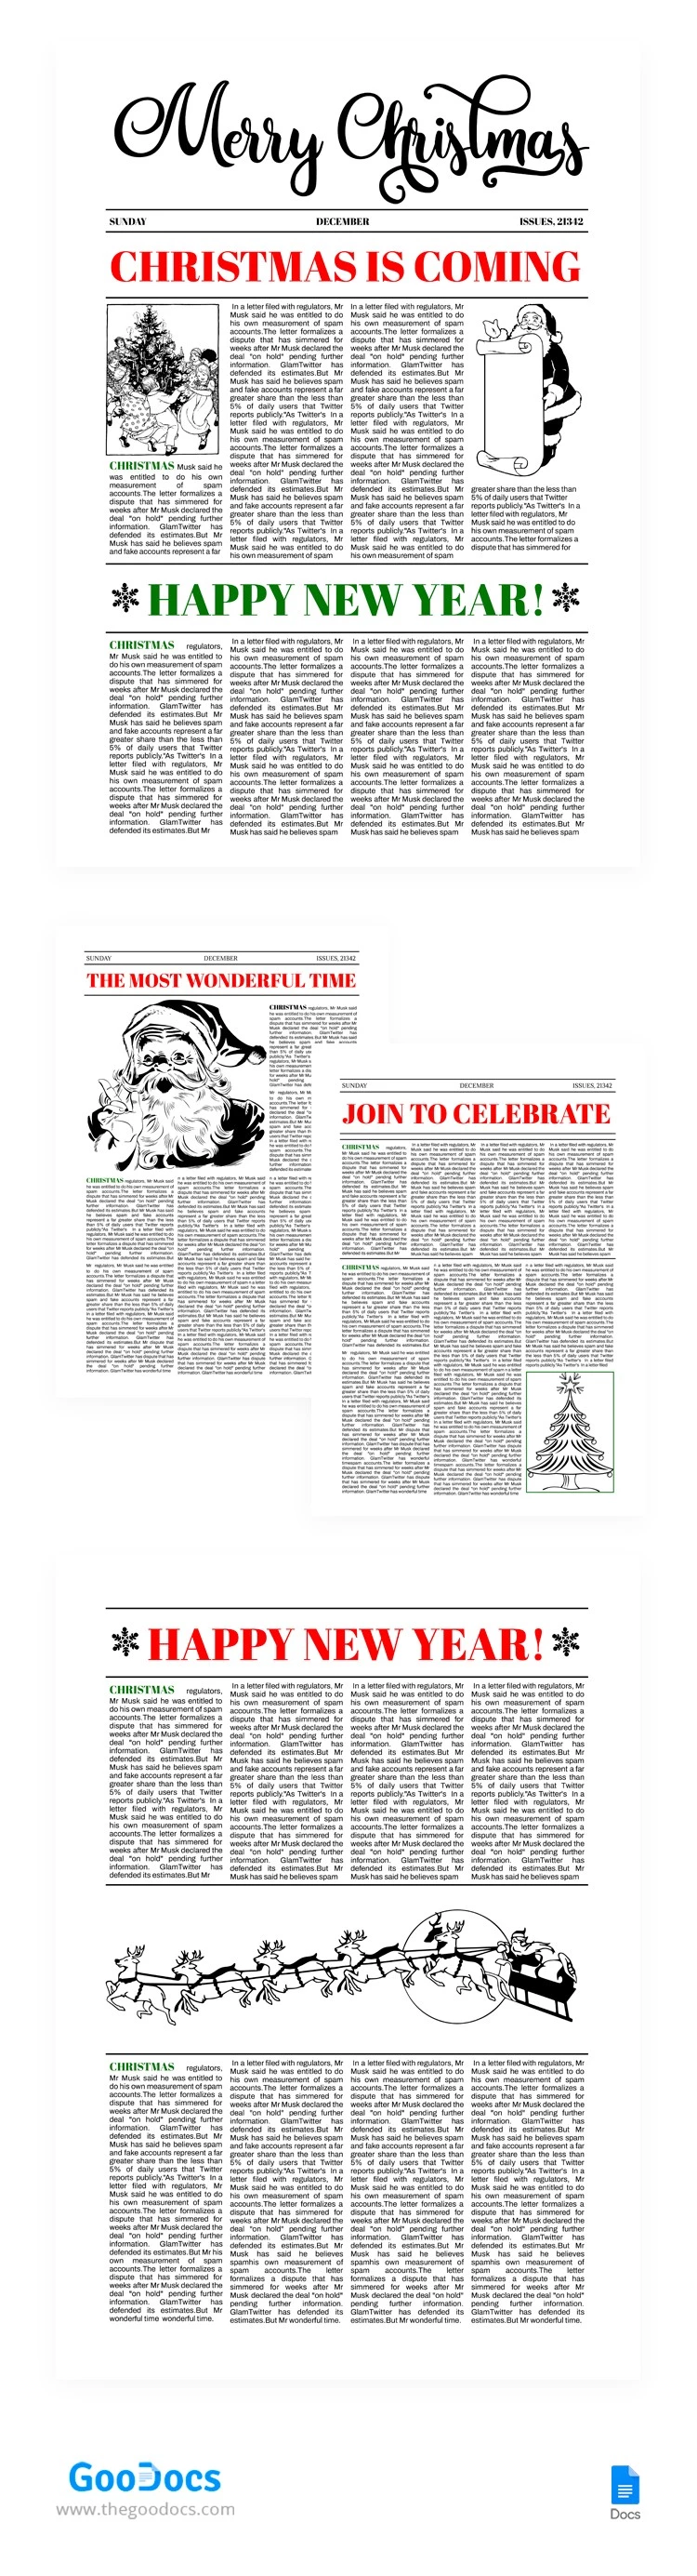 Natale Celebra Giornale - free Google Docs Template - 10064997